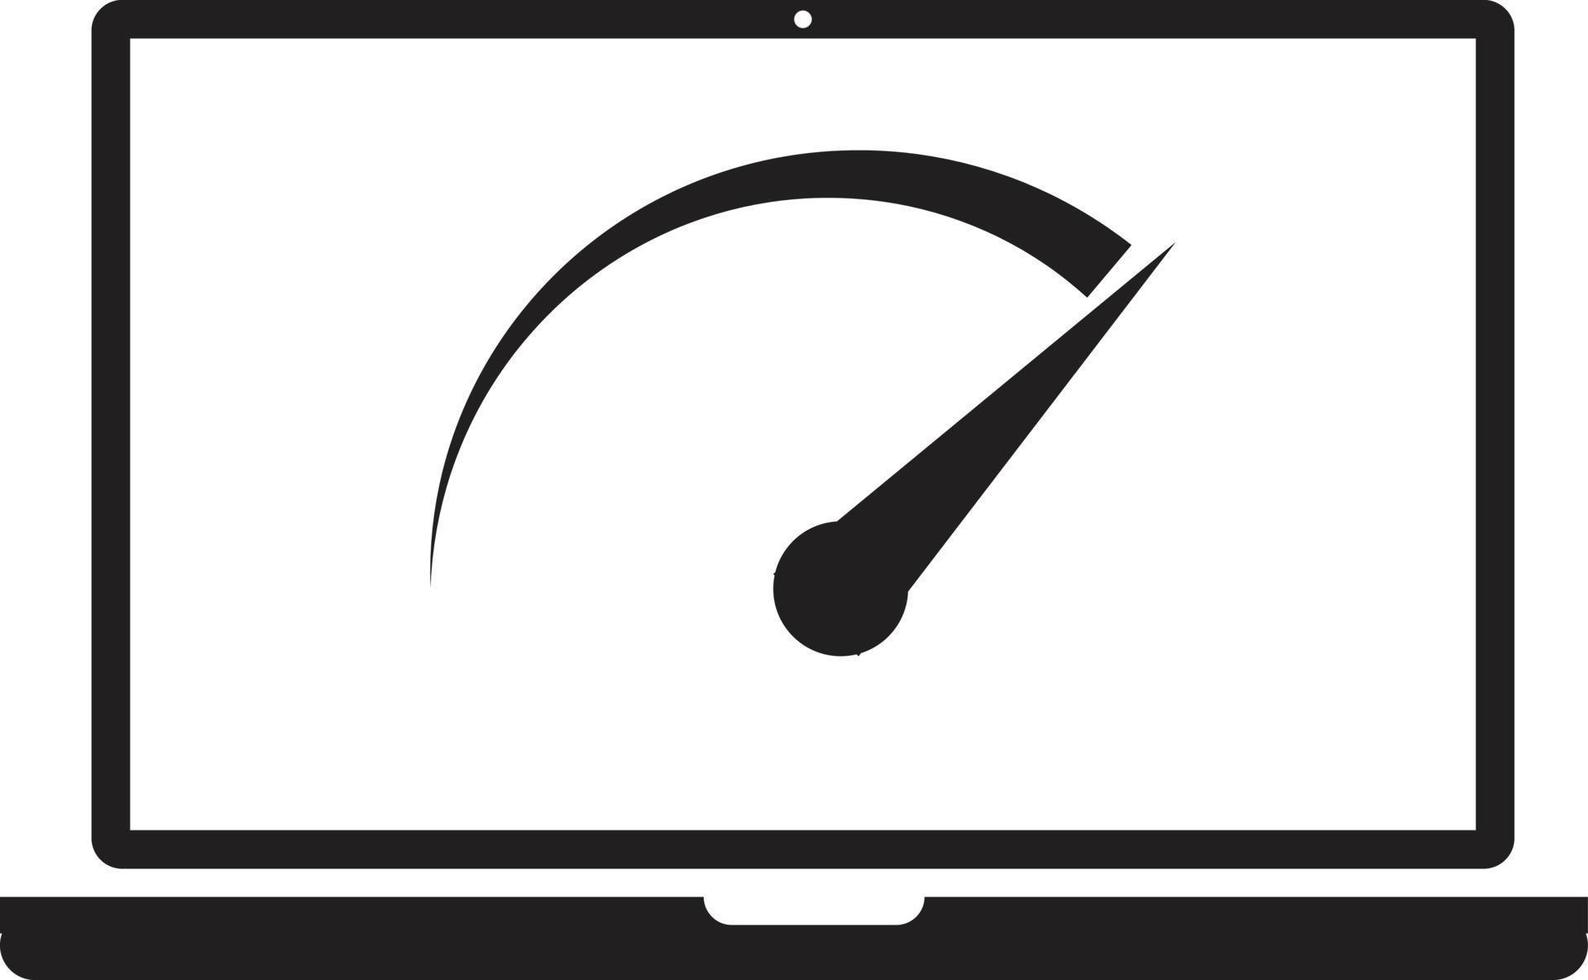 speed test laptop icon on white background. test speed laptop sign. speed optimization symbol. flat style. vector